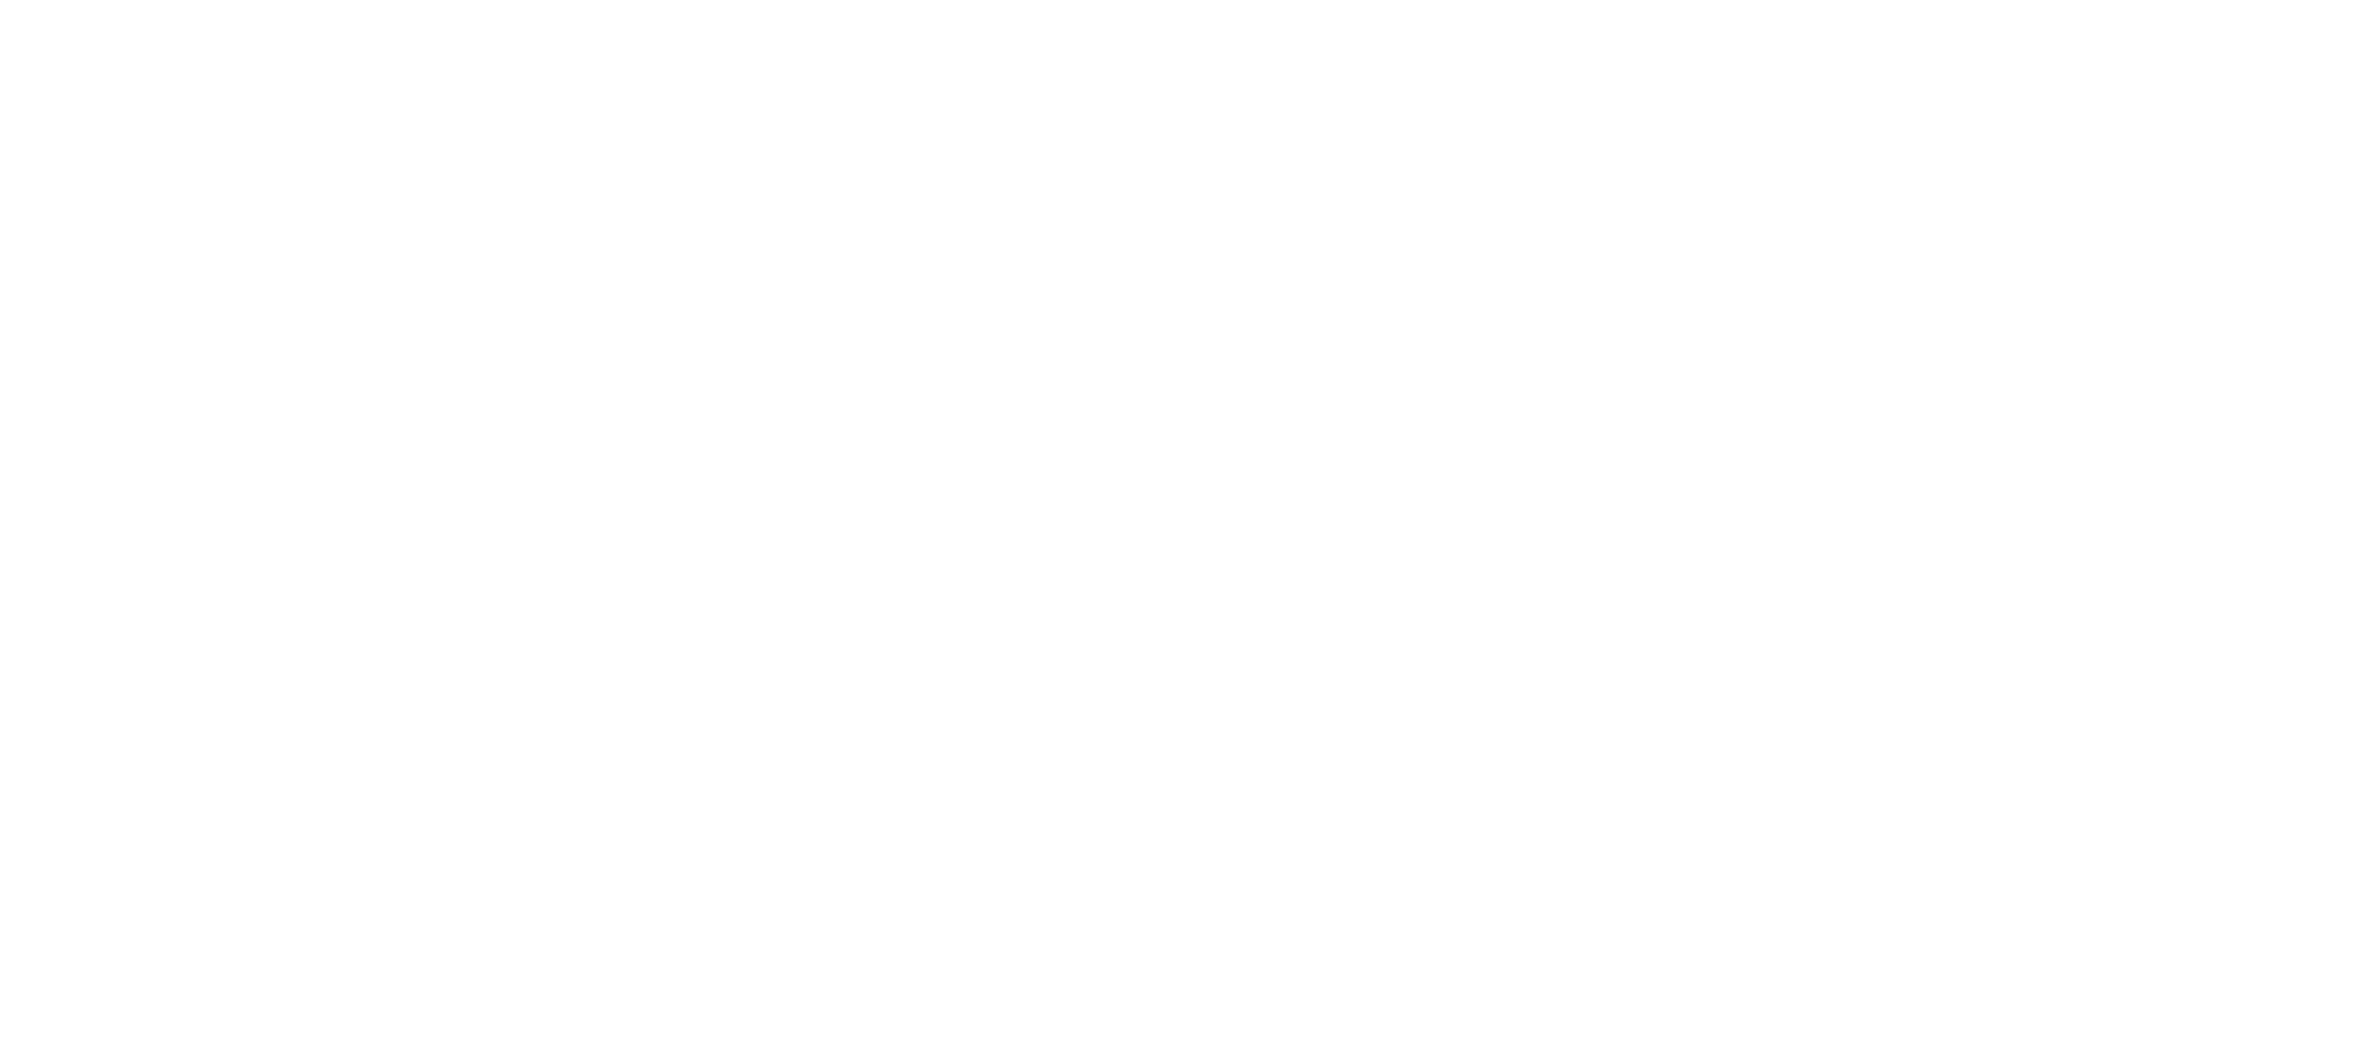 Biznet_GioCloud_Logo_One_Color_Whitepng